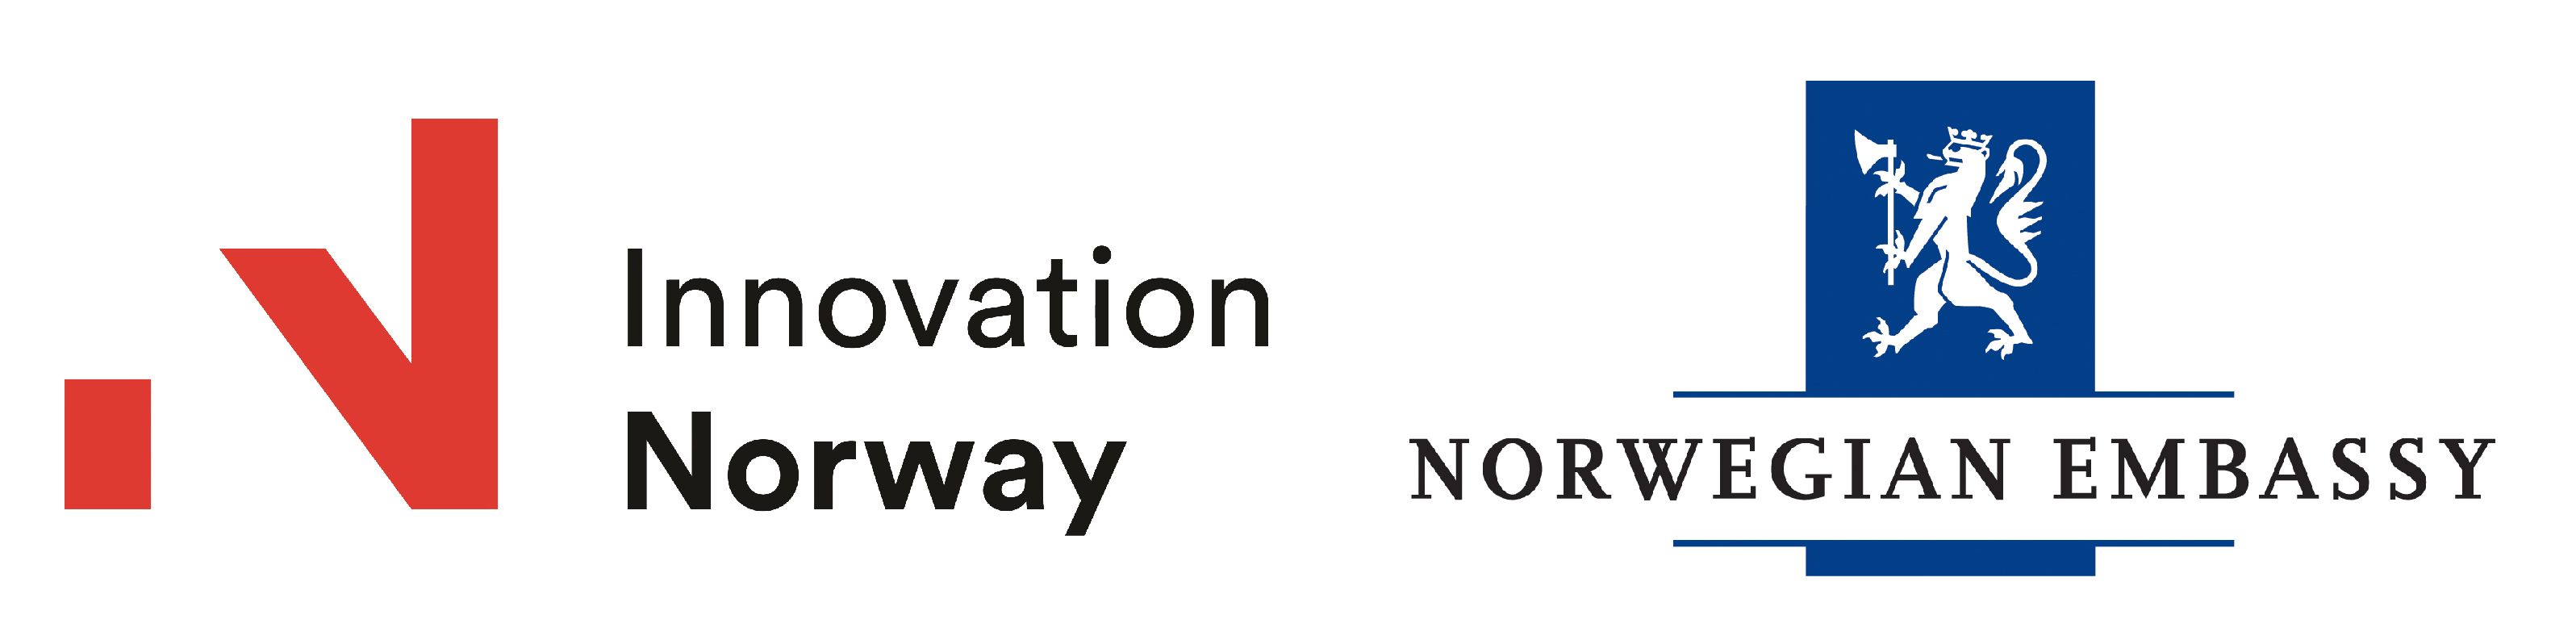 NORWAY-INOVATION-NOWEGIAN-EMBASSY-03f3b28f r & d